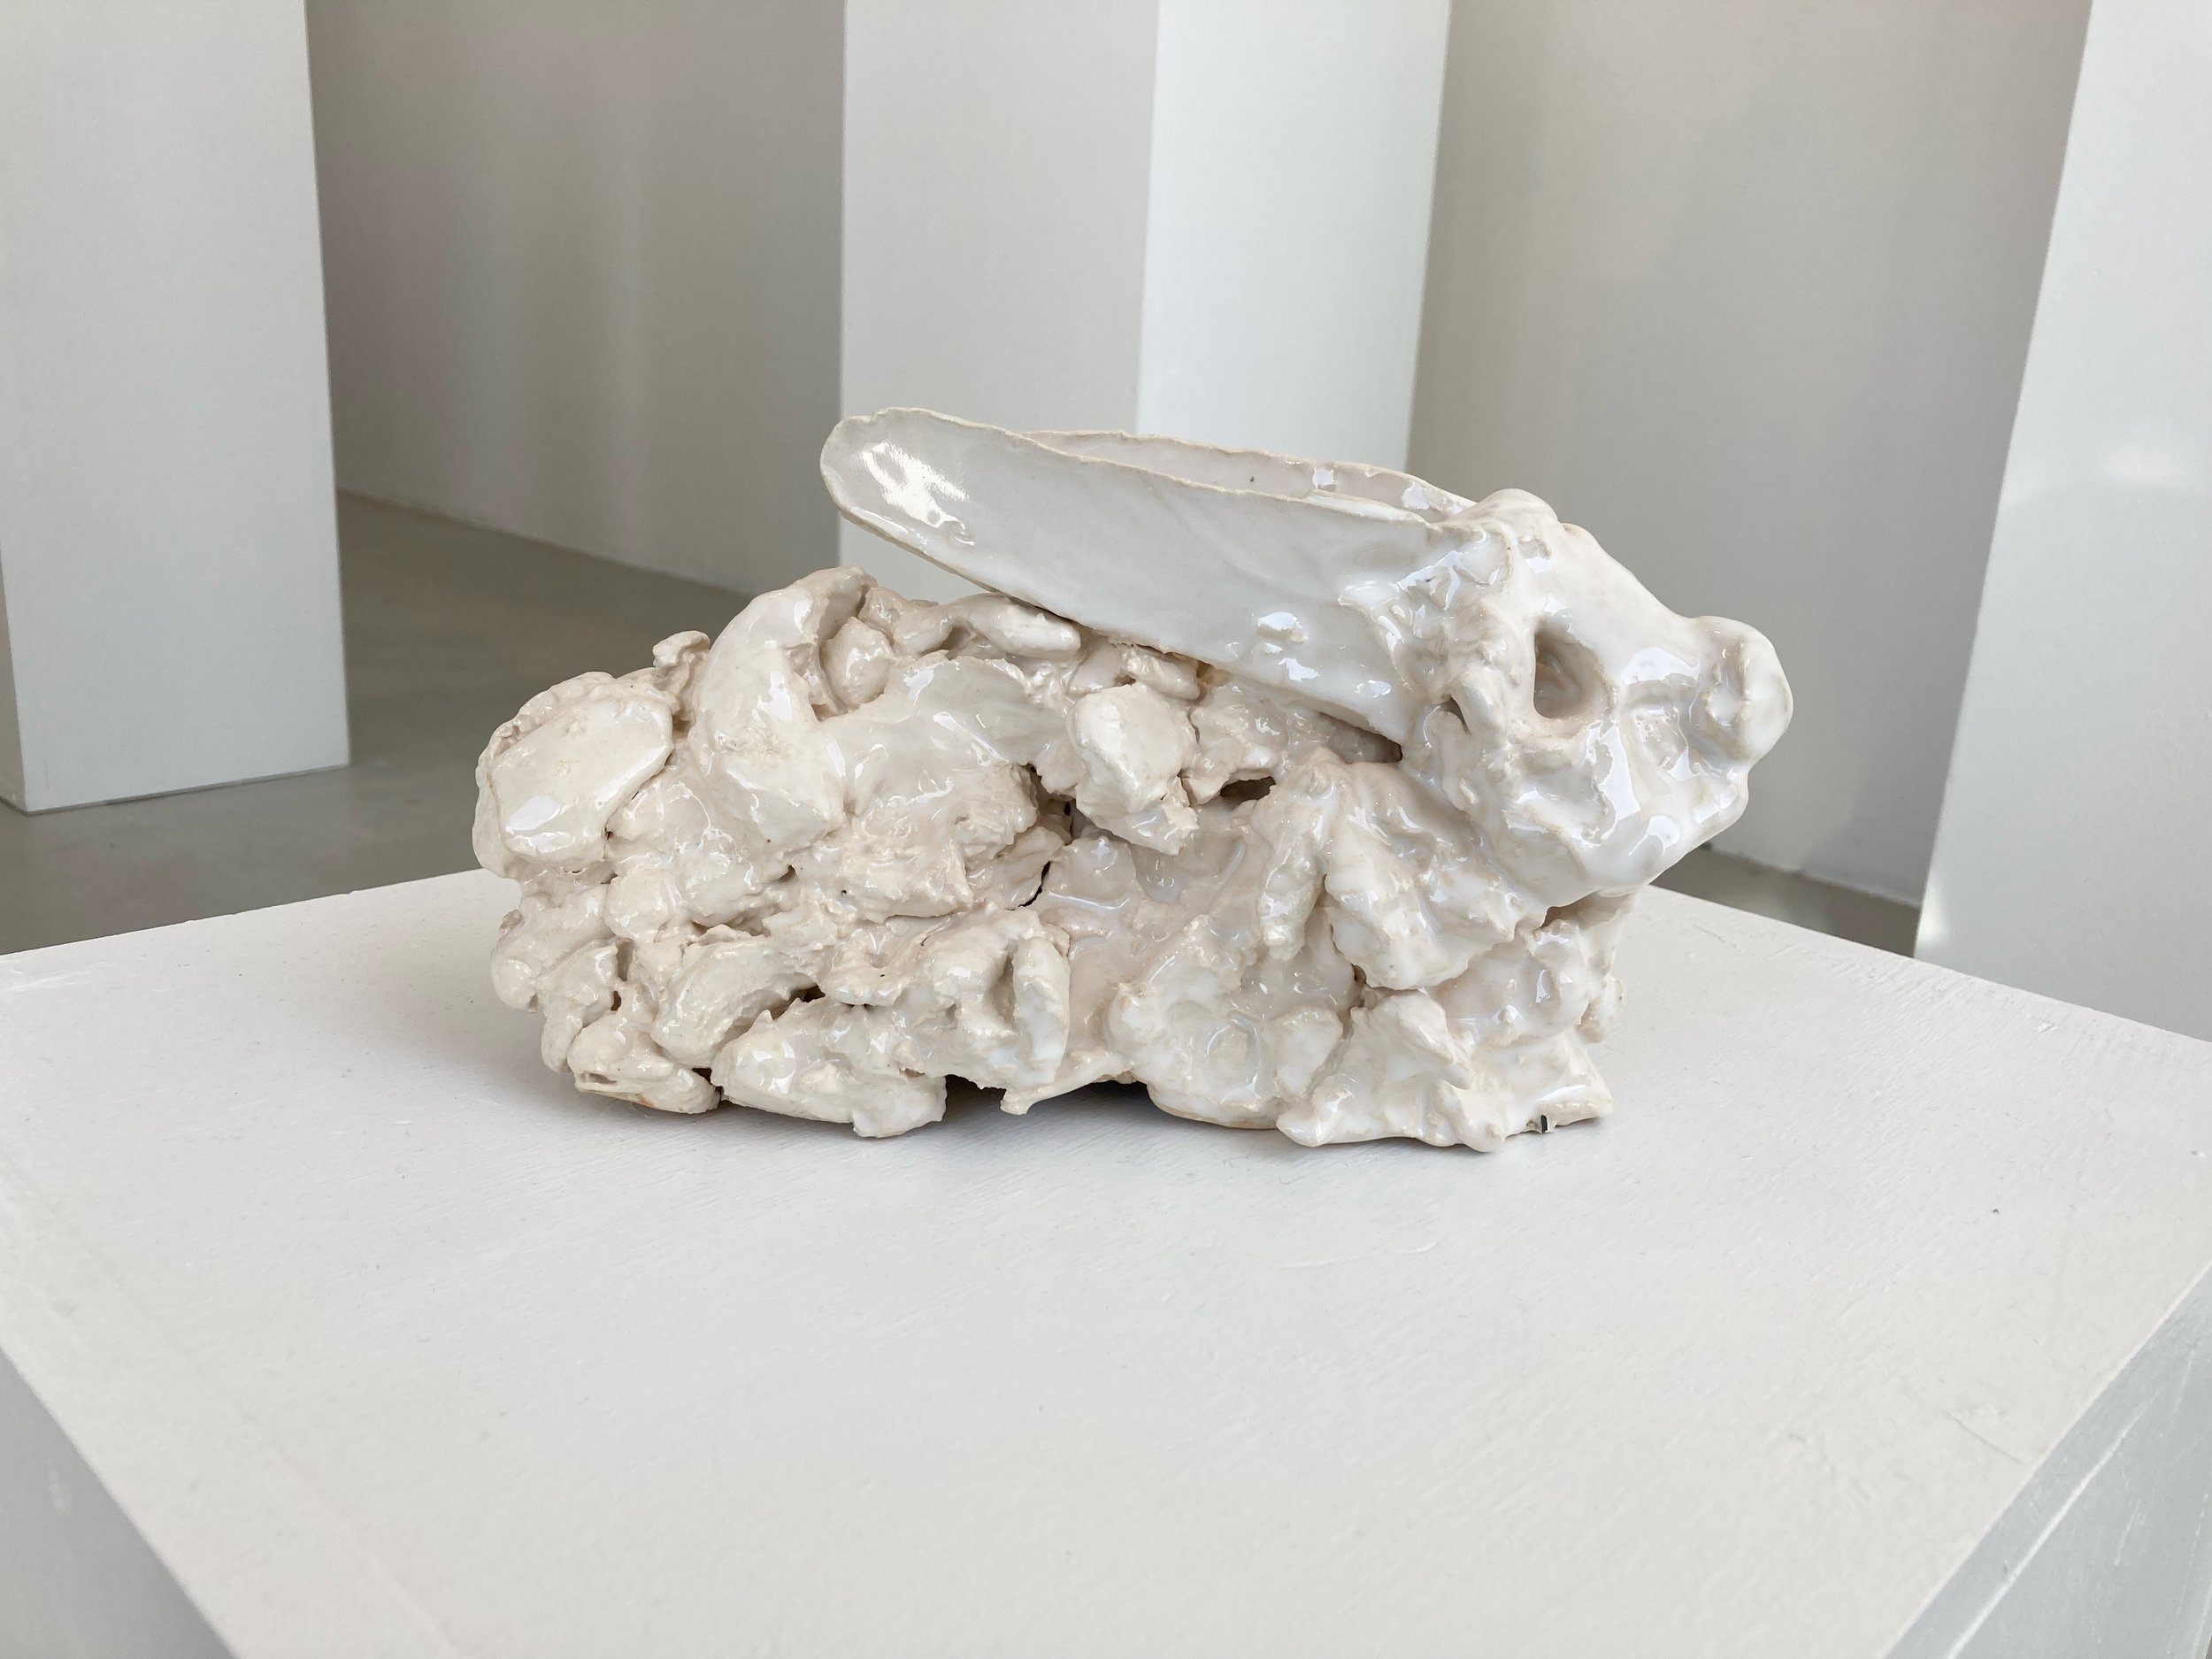  White Rabbit, Glazed Ceramic, 6” X 11” X 5”, 2021  